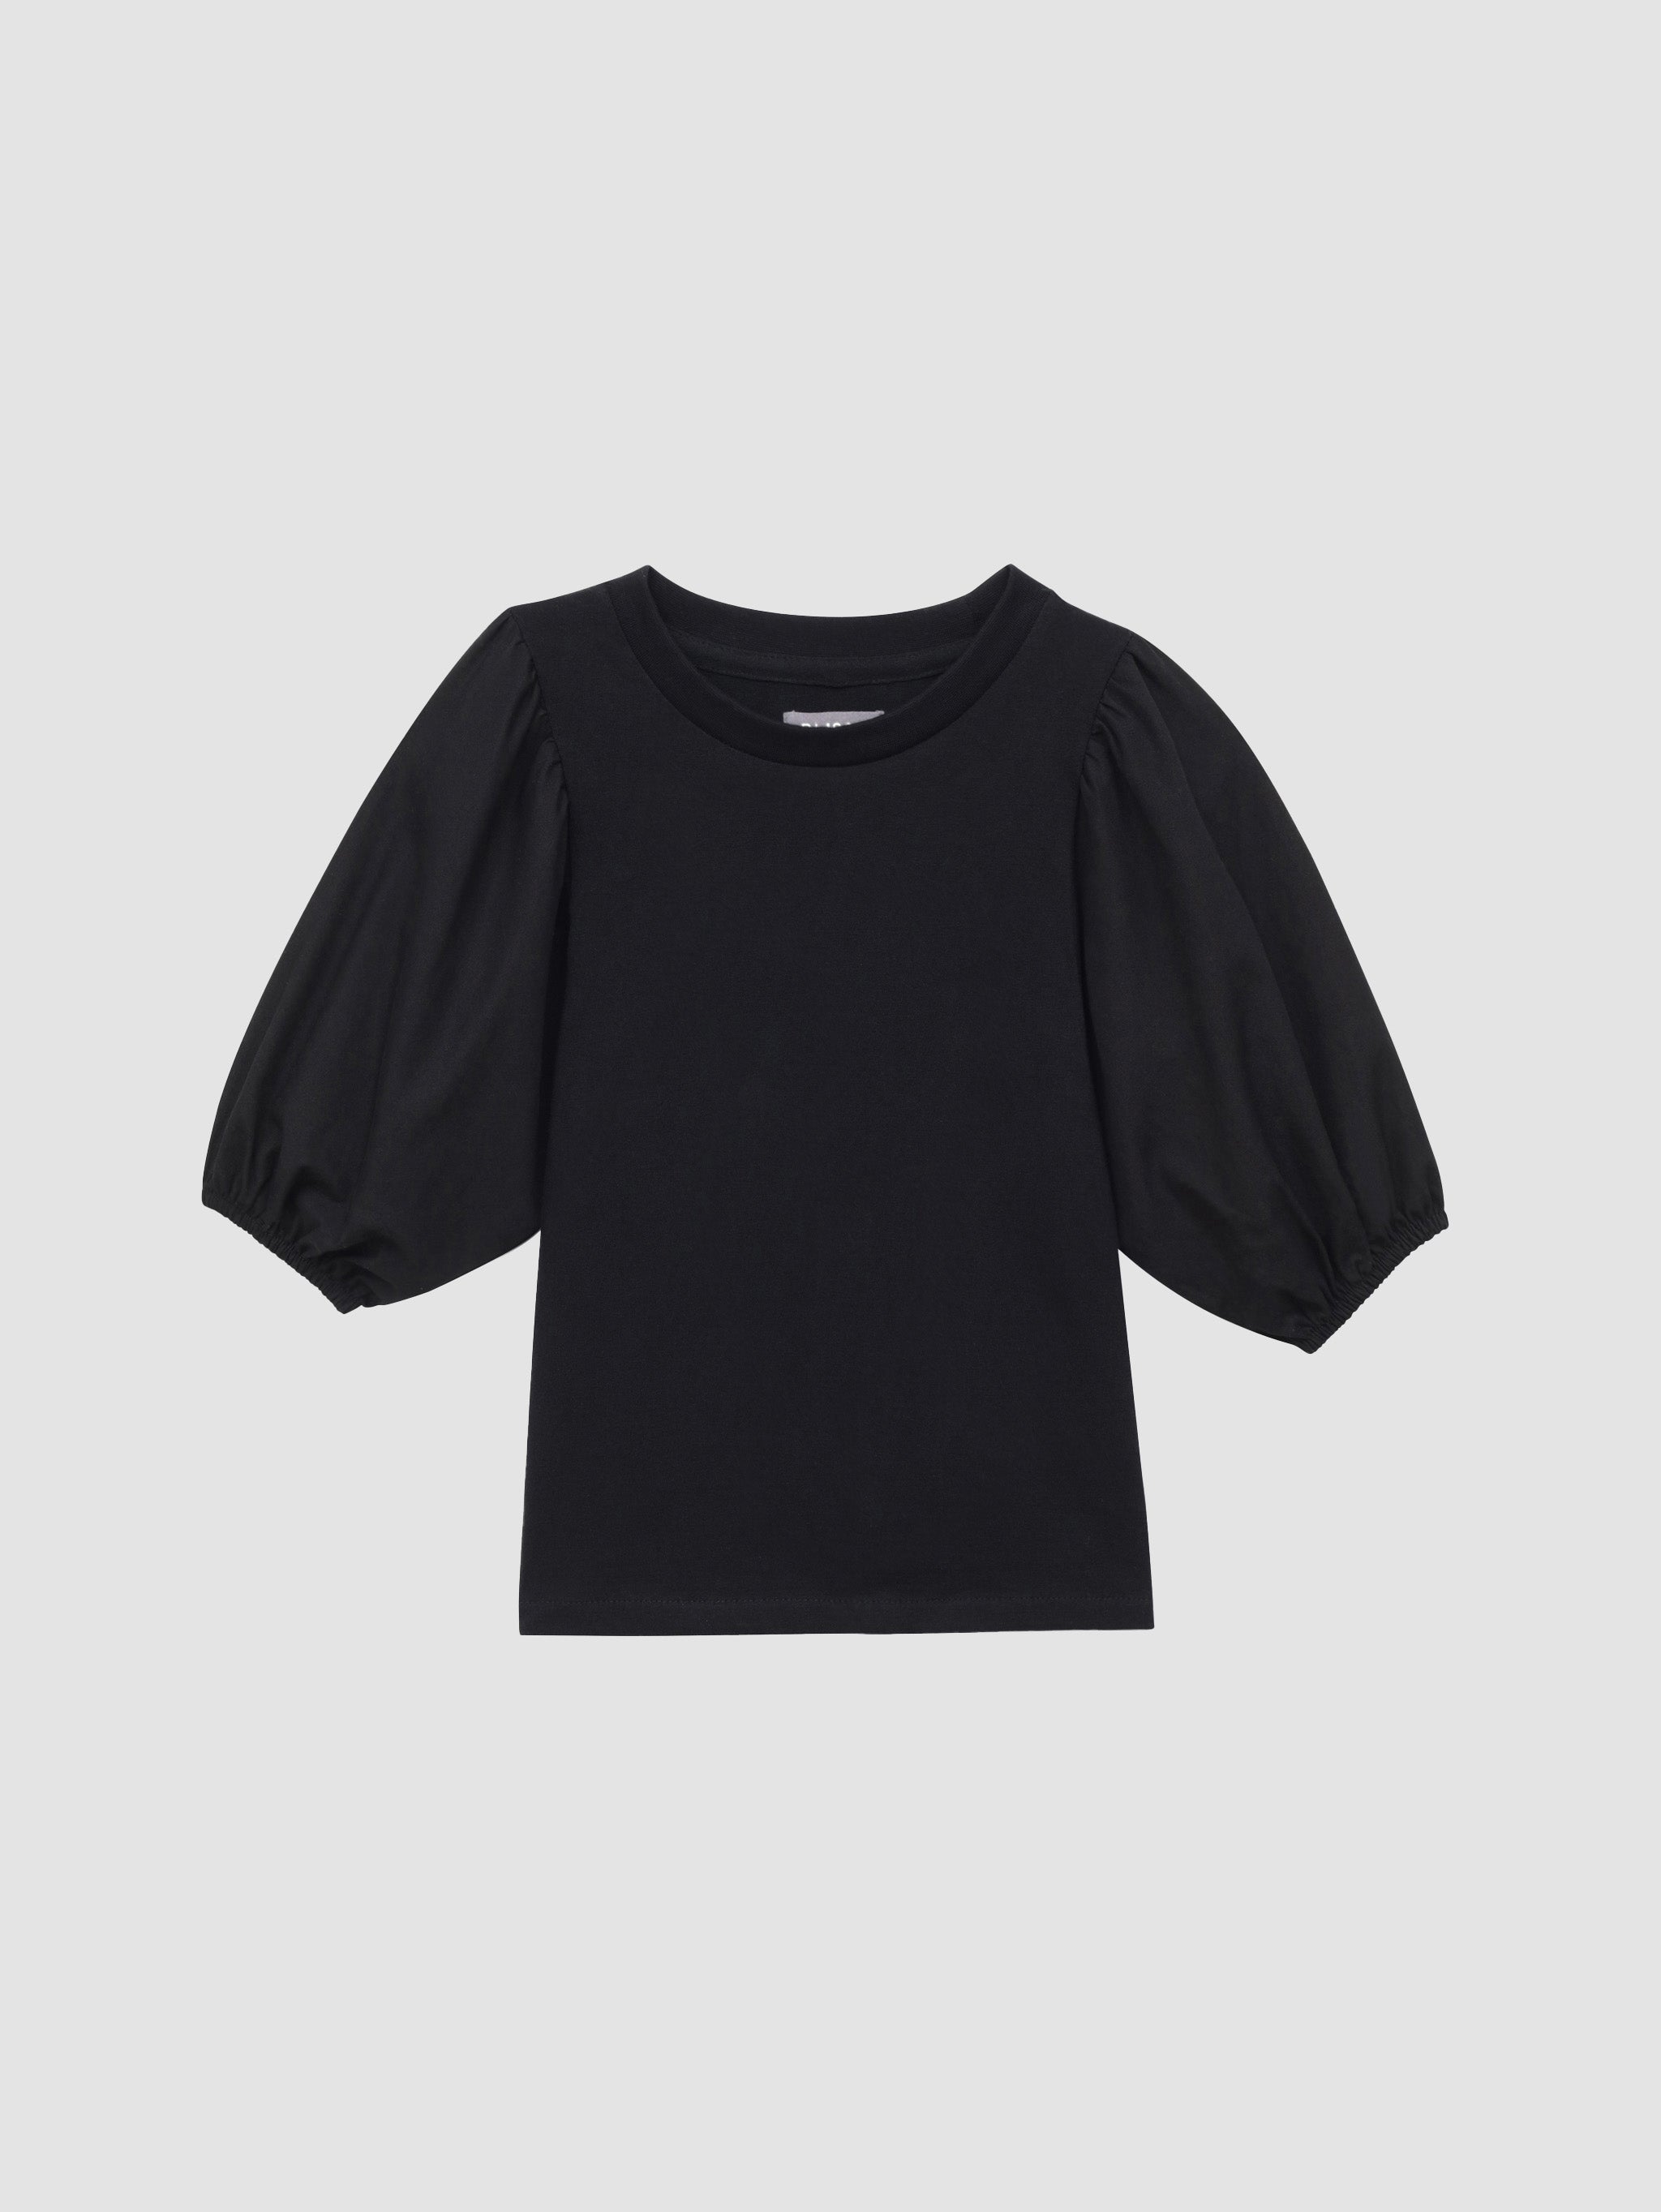 Kayla Shirt Short Sleeve Tee | Black